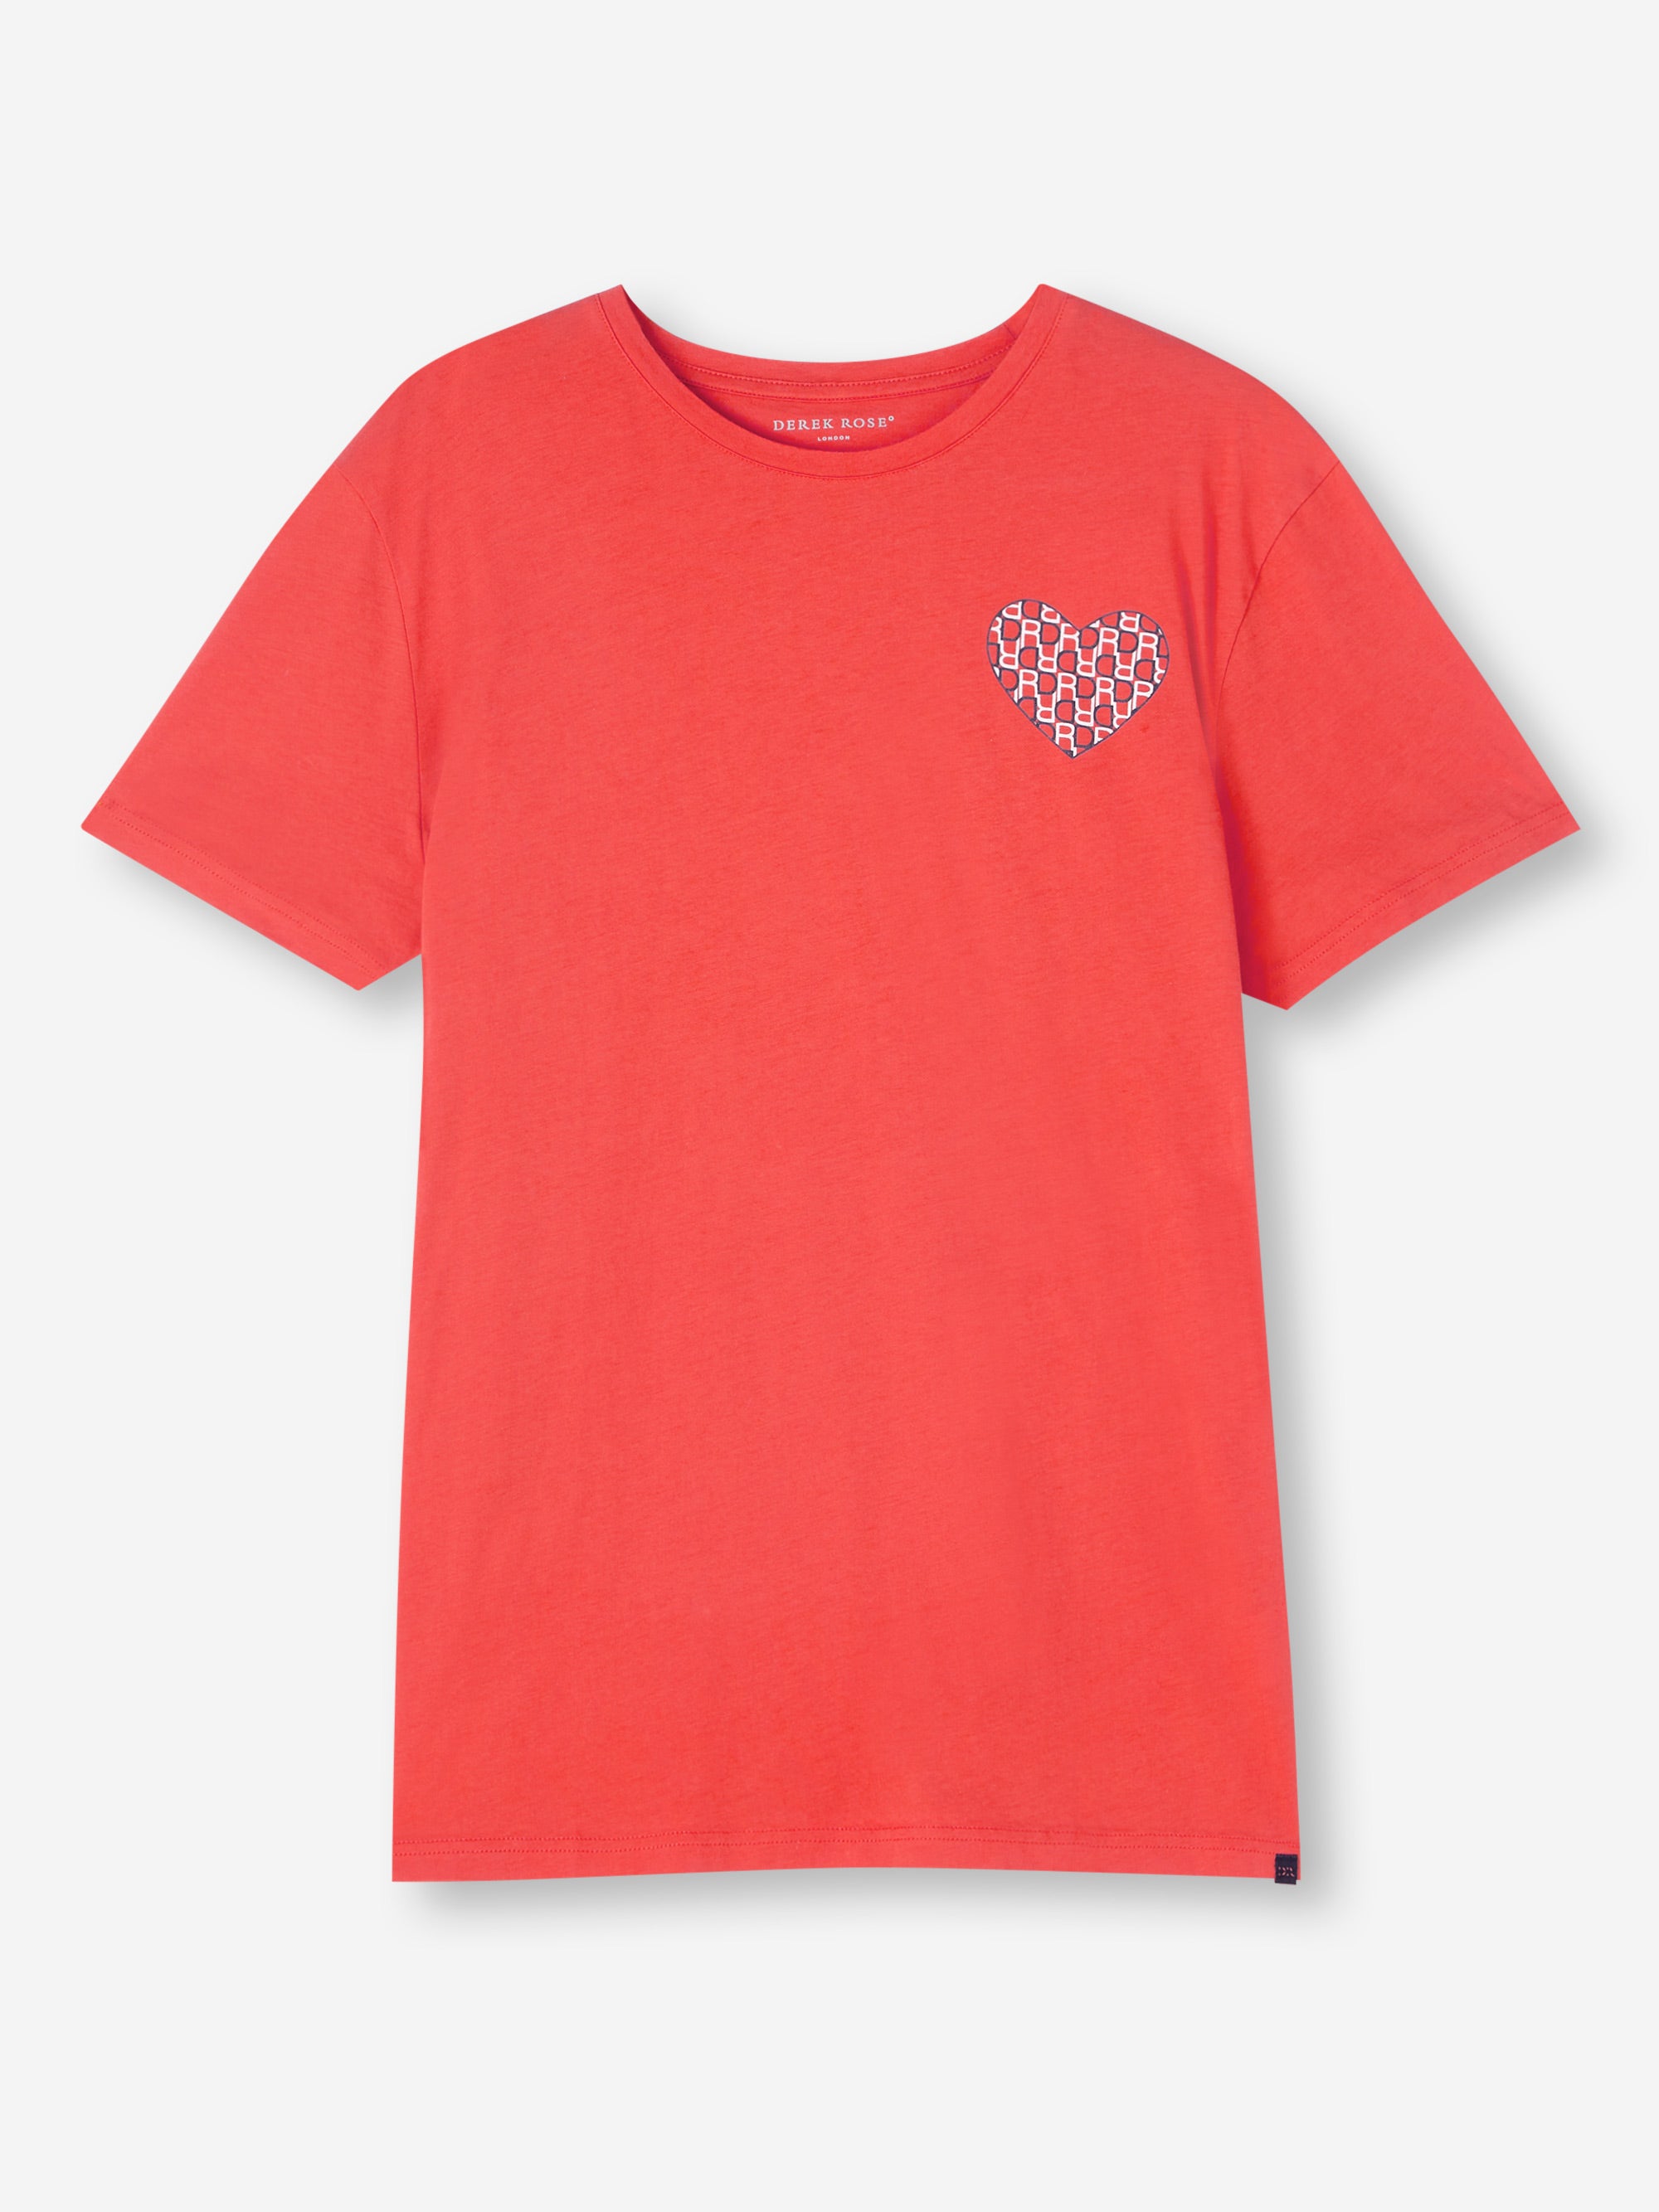 Men's T-Shirt Ripley 15 Pima Cotton Red